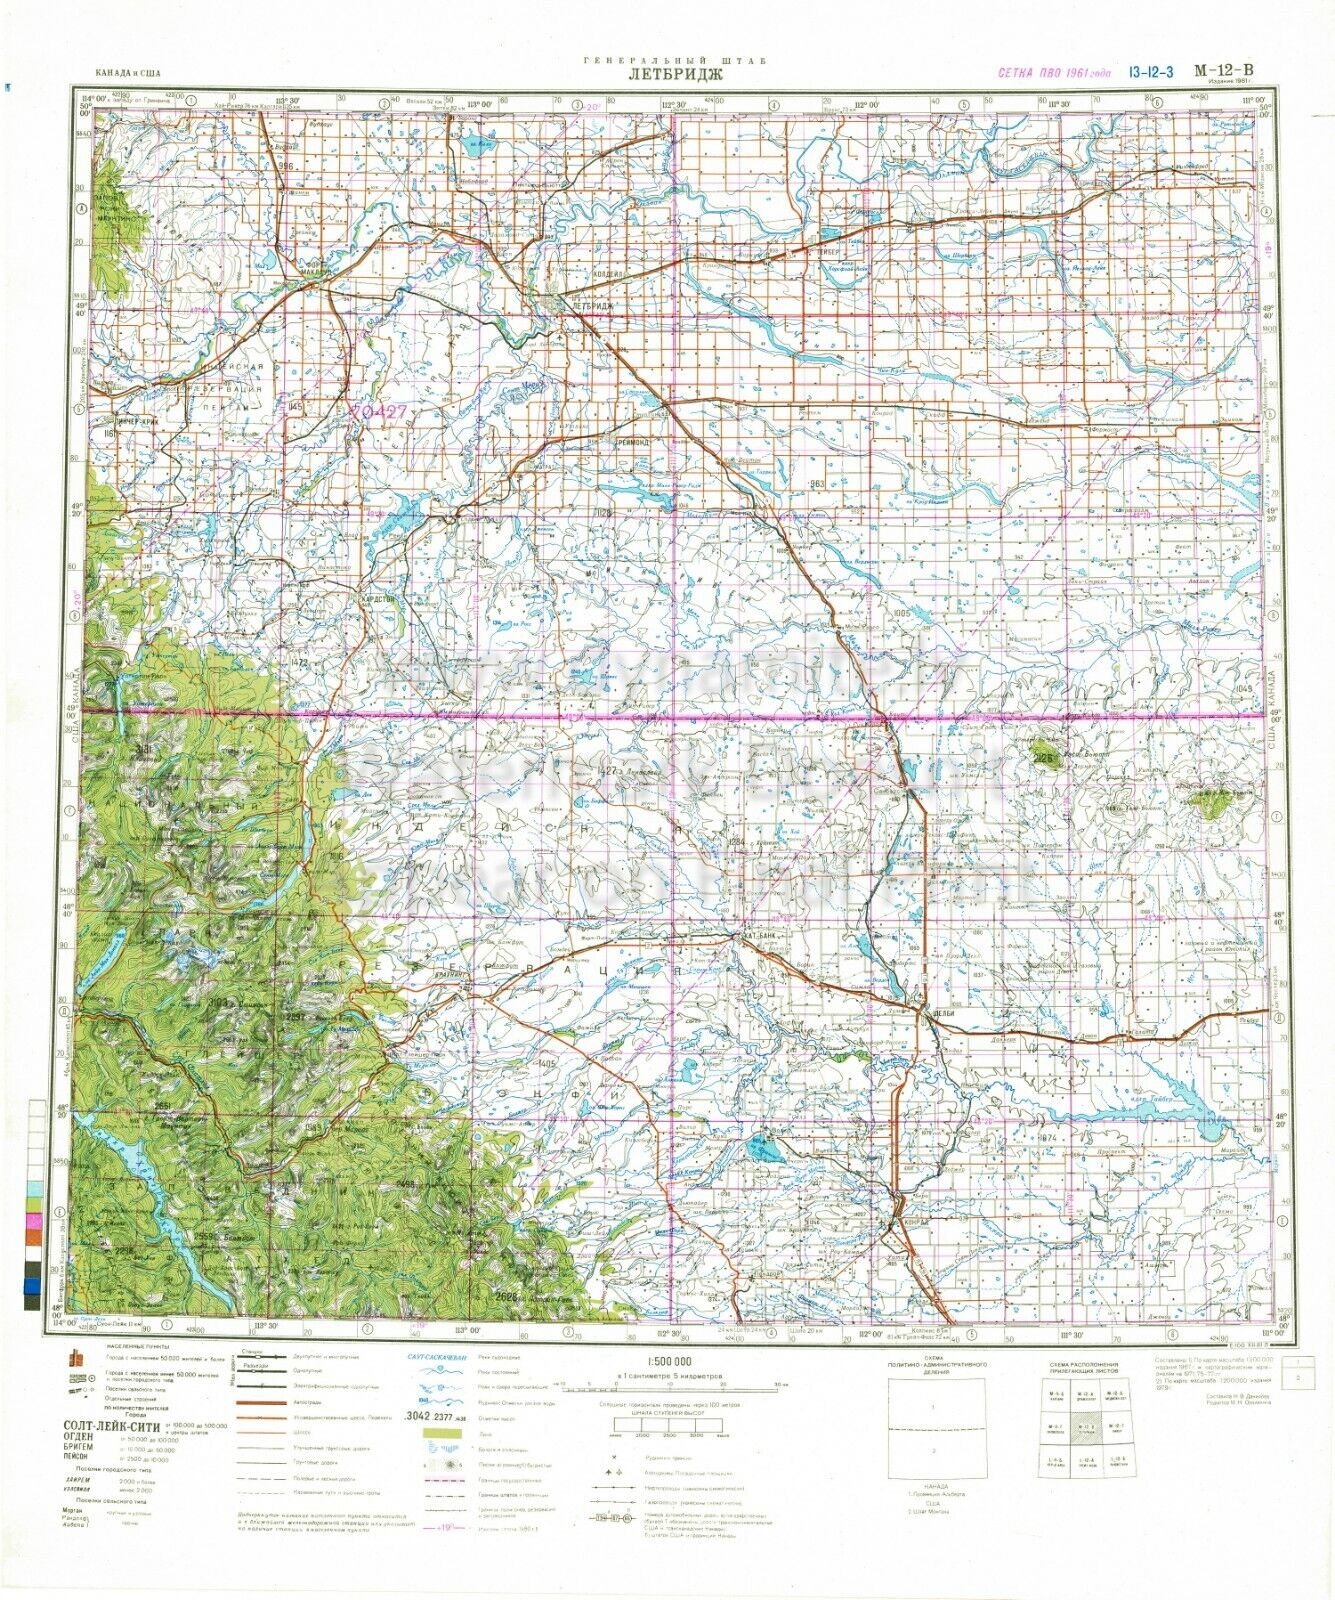 Soviet Russian Topographic Map LETHBRIDGE ALBERTA CANADA USA BORDER 1981 REPRINT